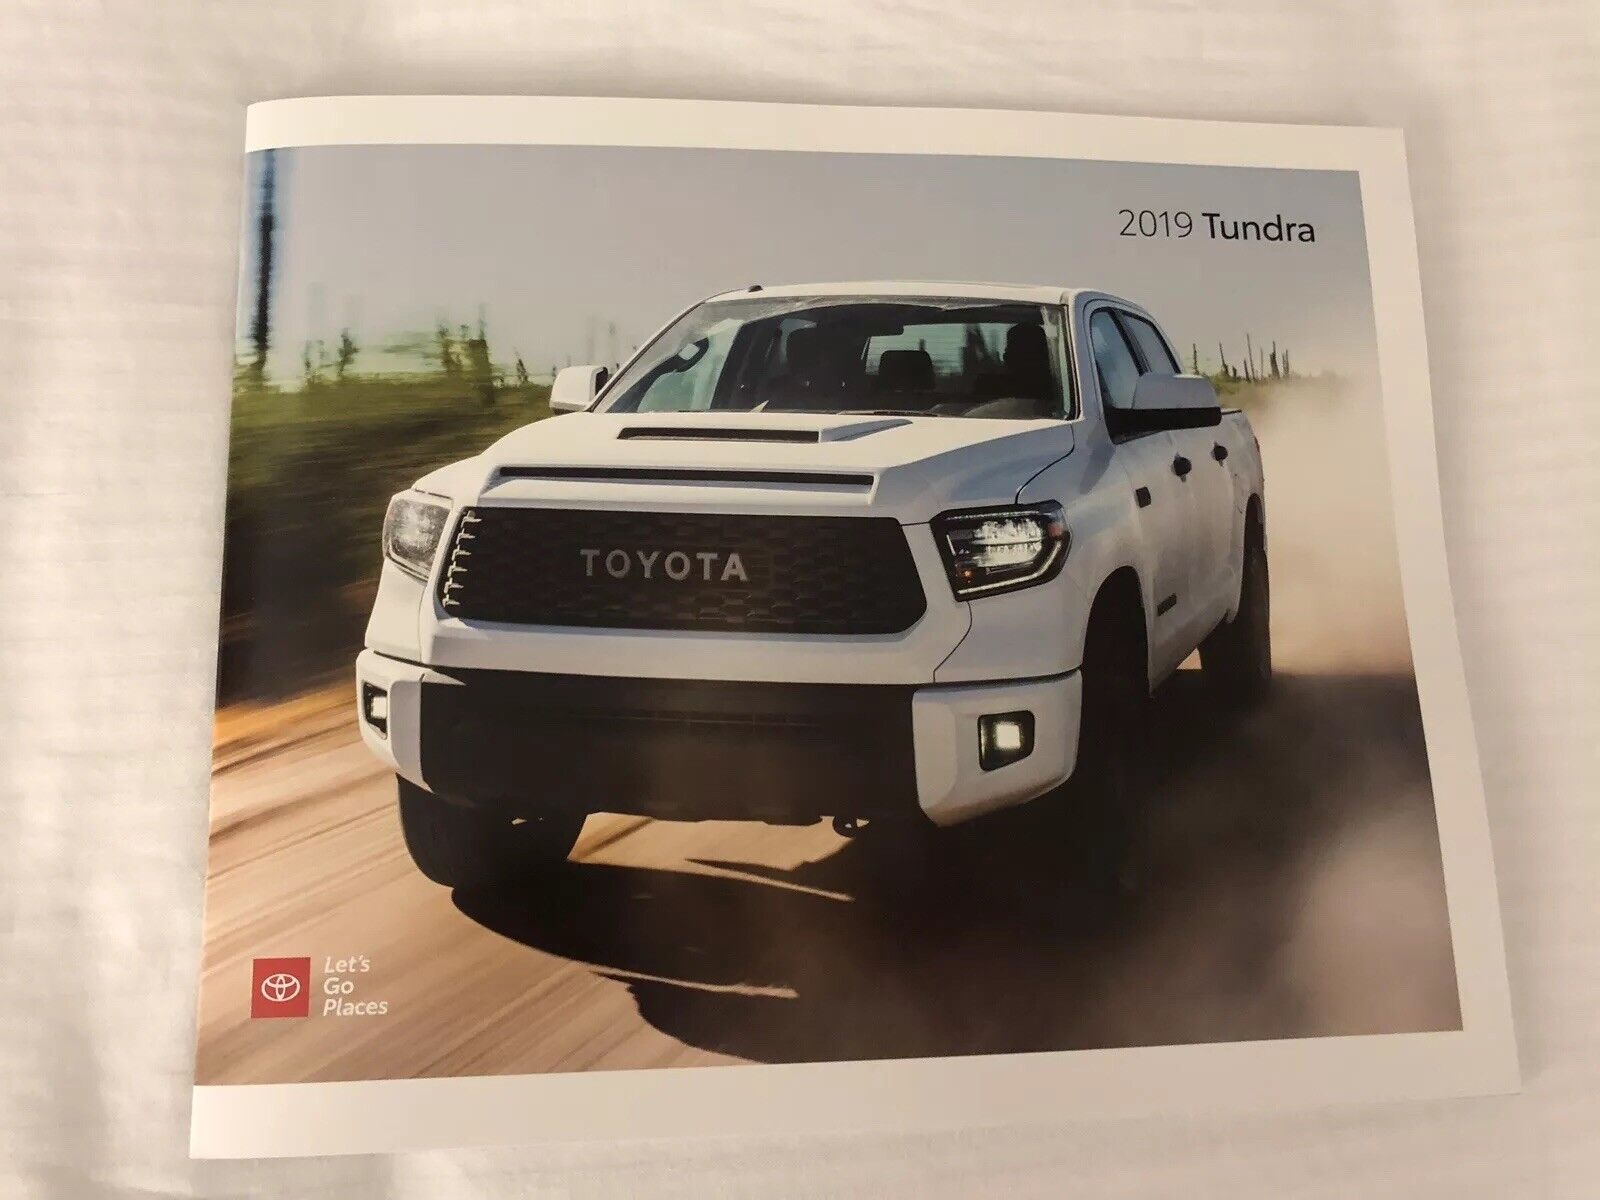 2019 TOYOTA TUNDRA 28-page Original Sales Brochure